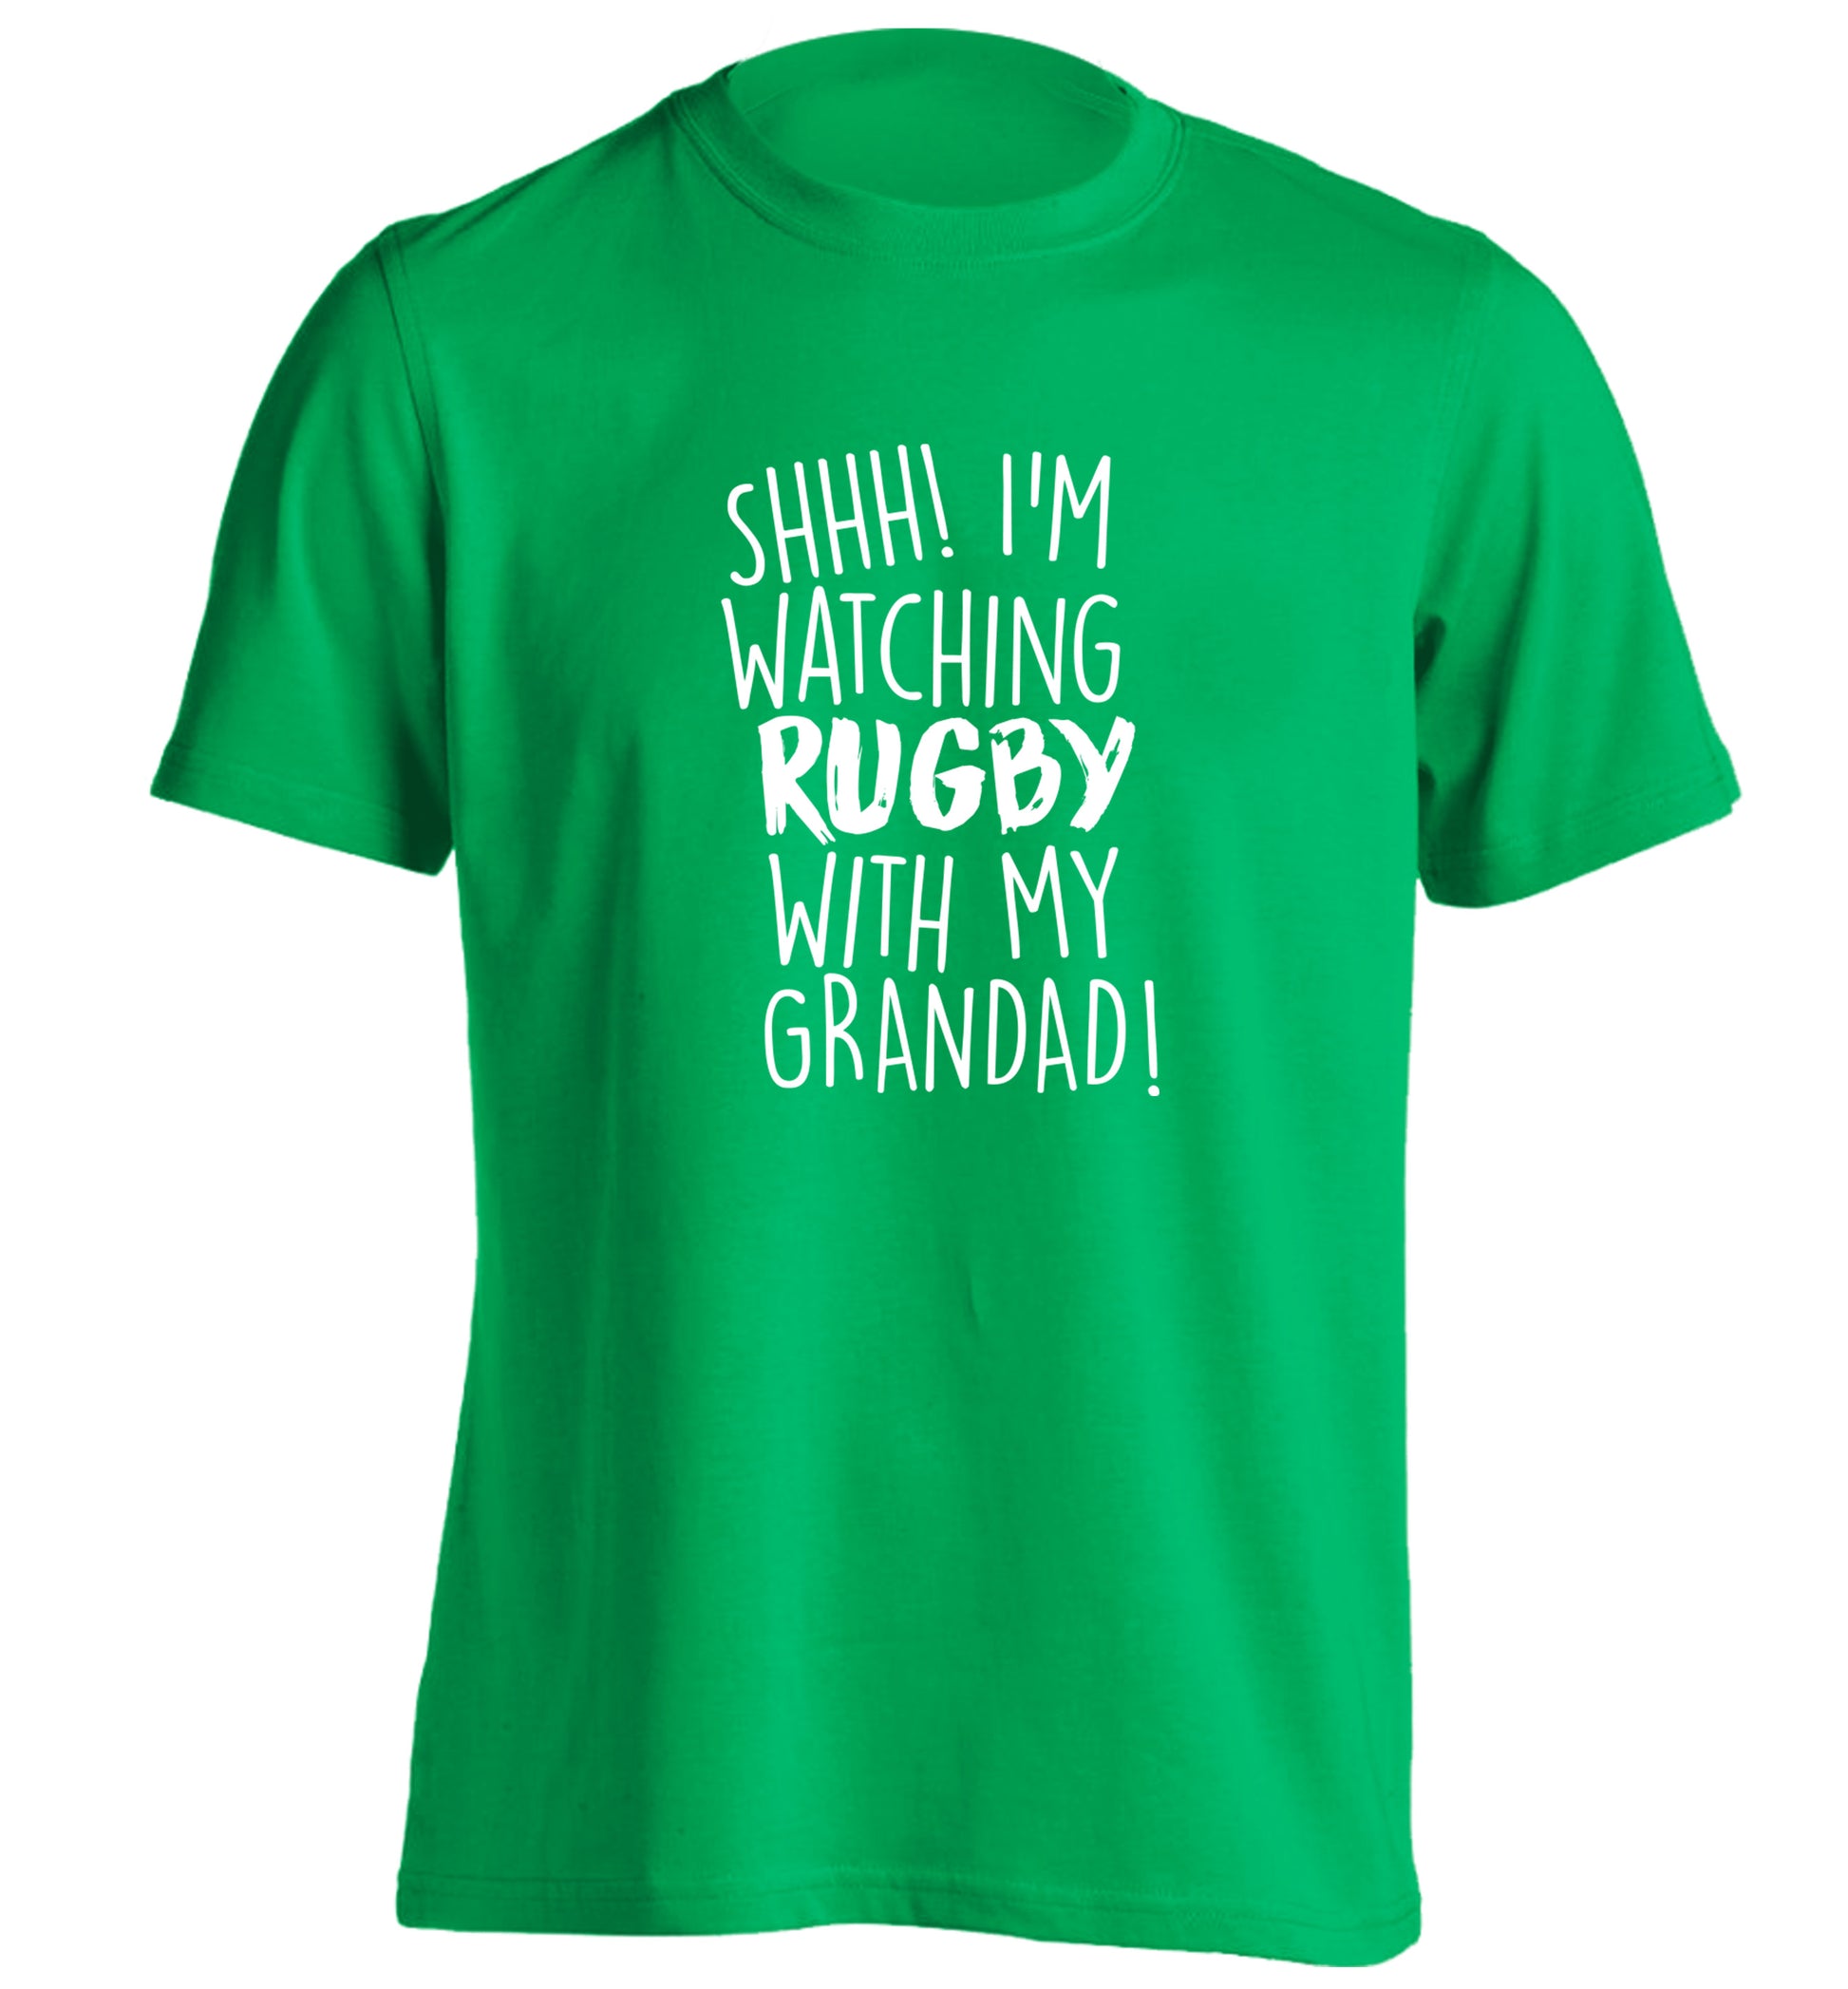 Shh I'm watching rugby with my grandad adults unisex green Tshirt 2XL